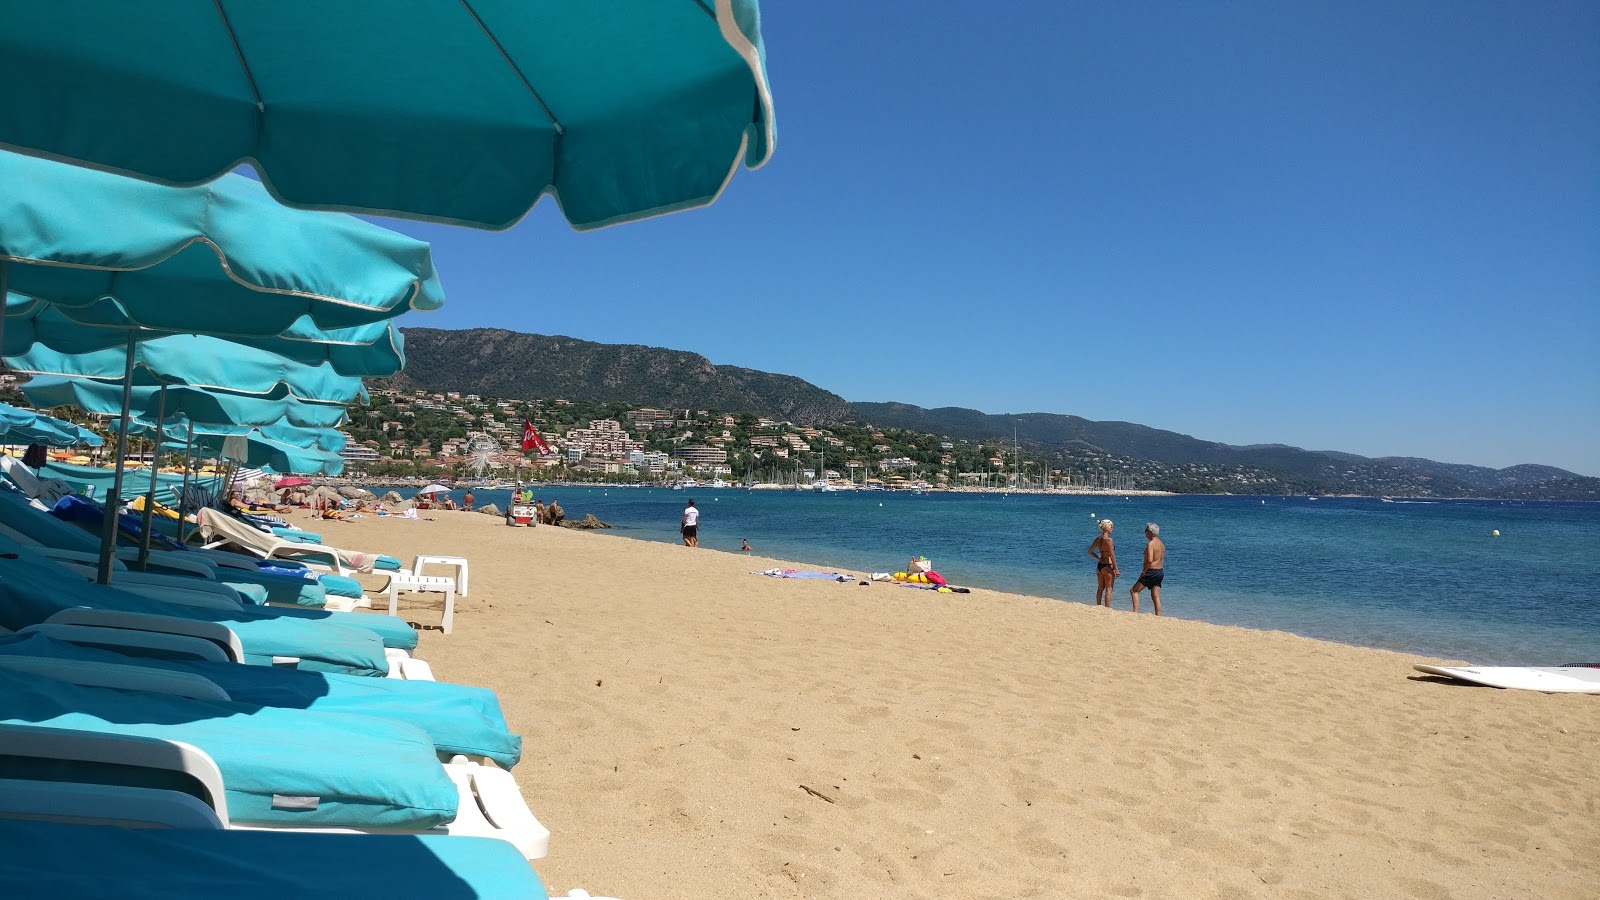 Foto de Praia de Lavandou - lugar popular entre os apreciadores de relaxamento